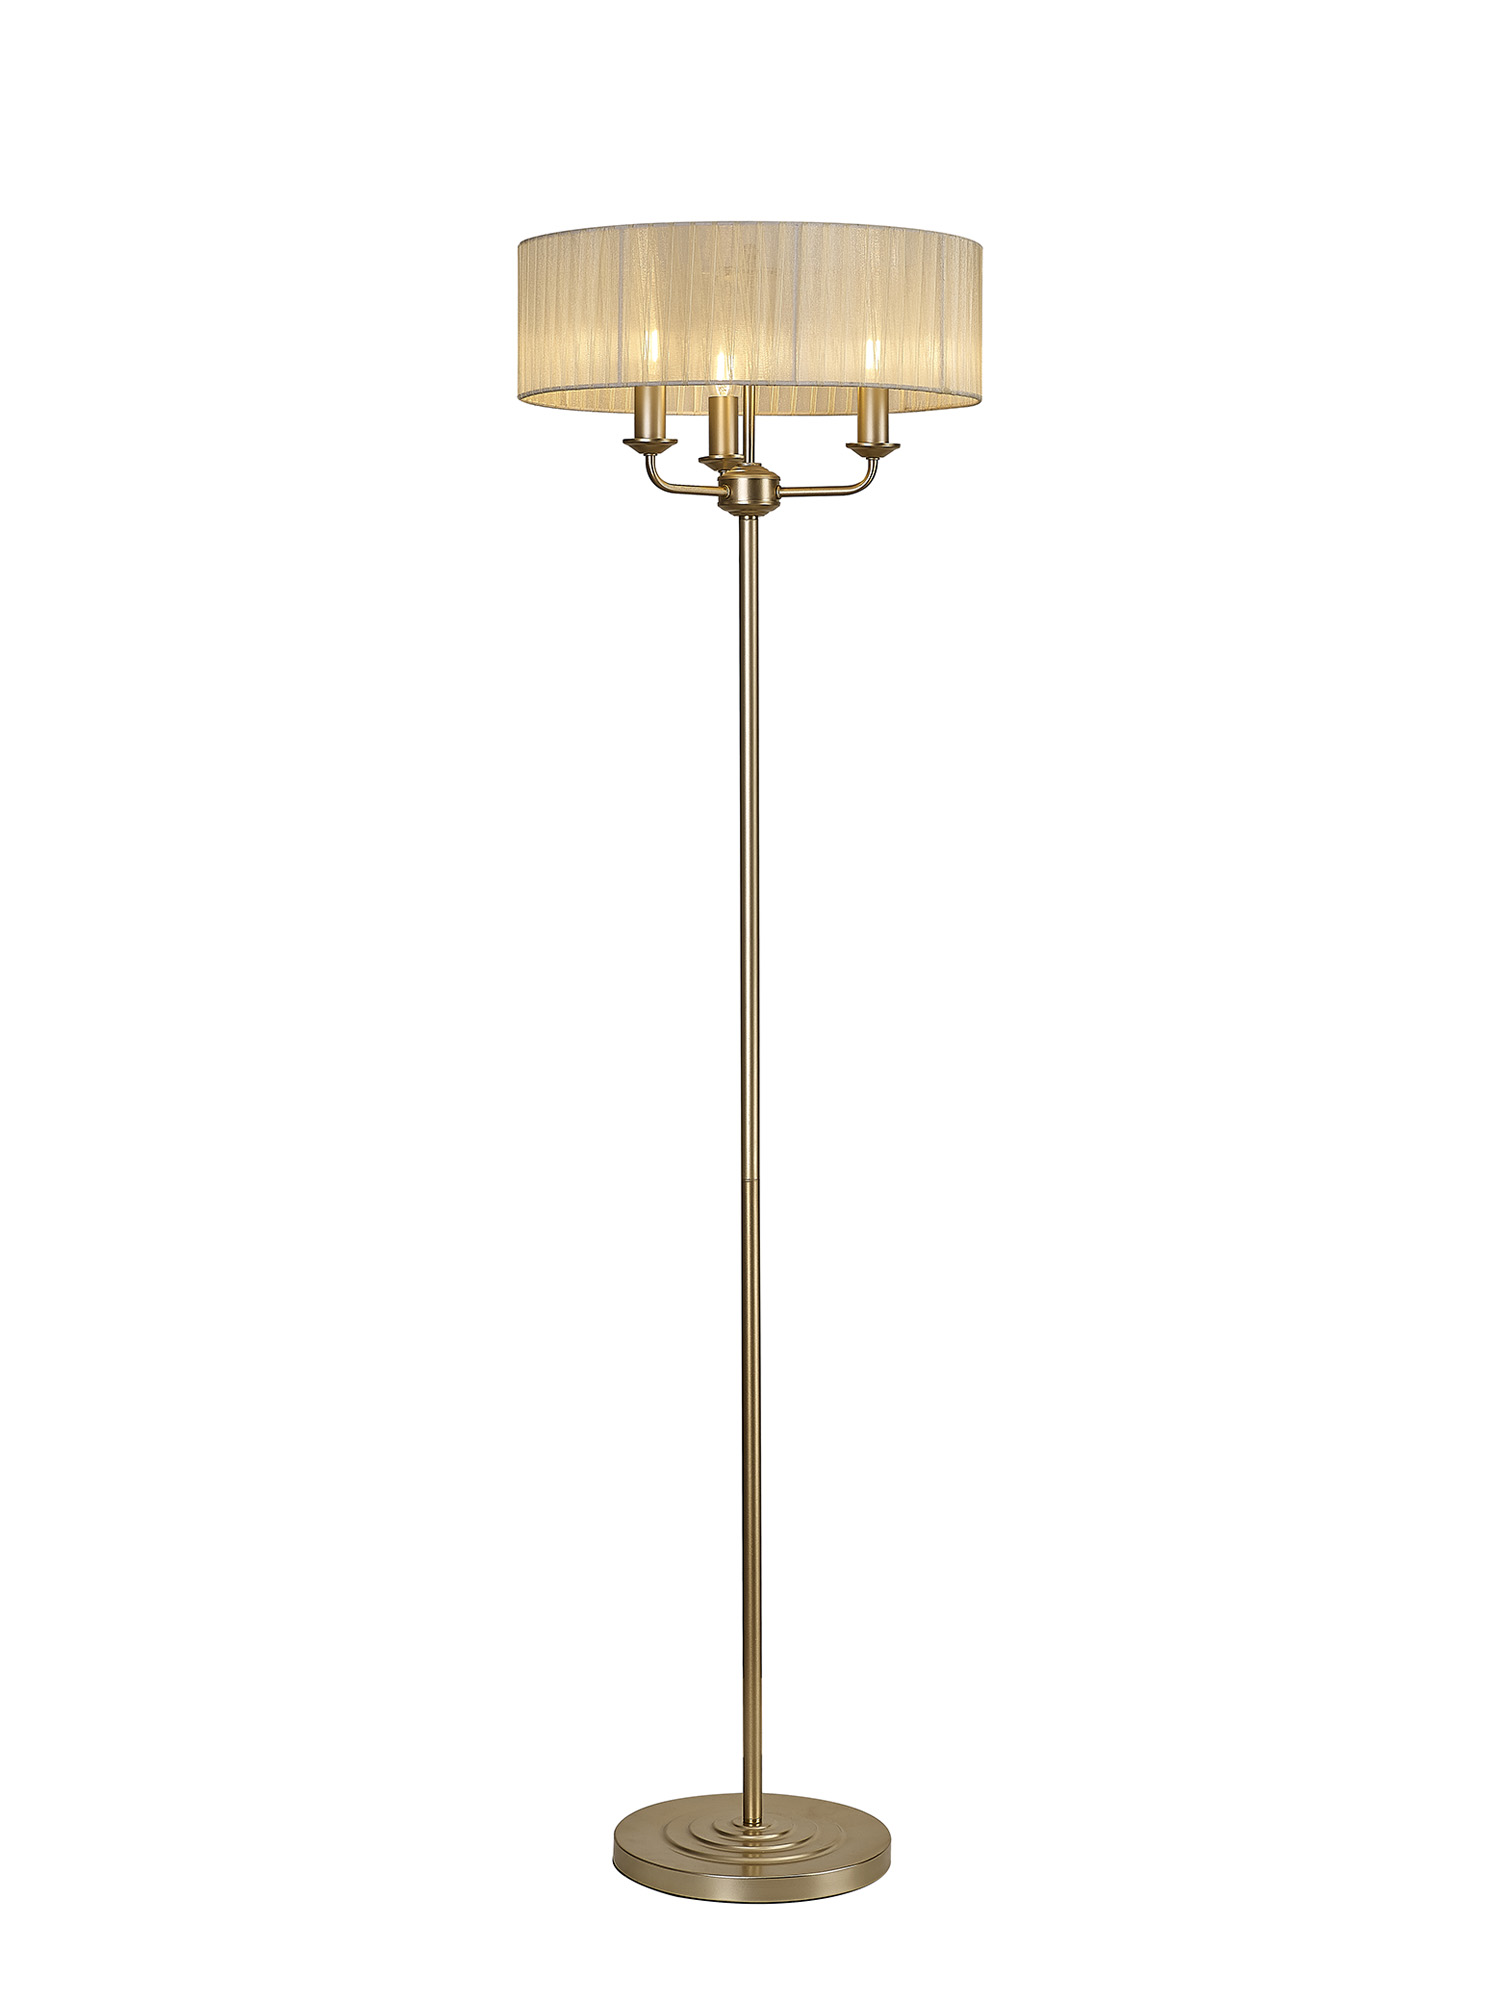 DK0993  Banyan 45cm 3 Light Floor Lamp Champagne Gold, Cream